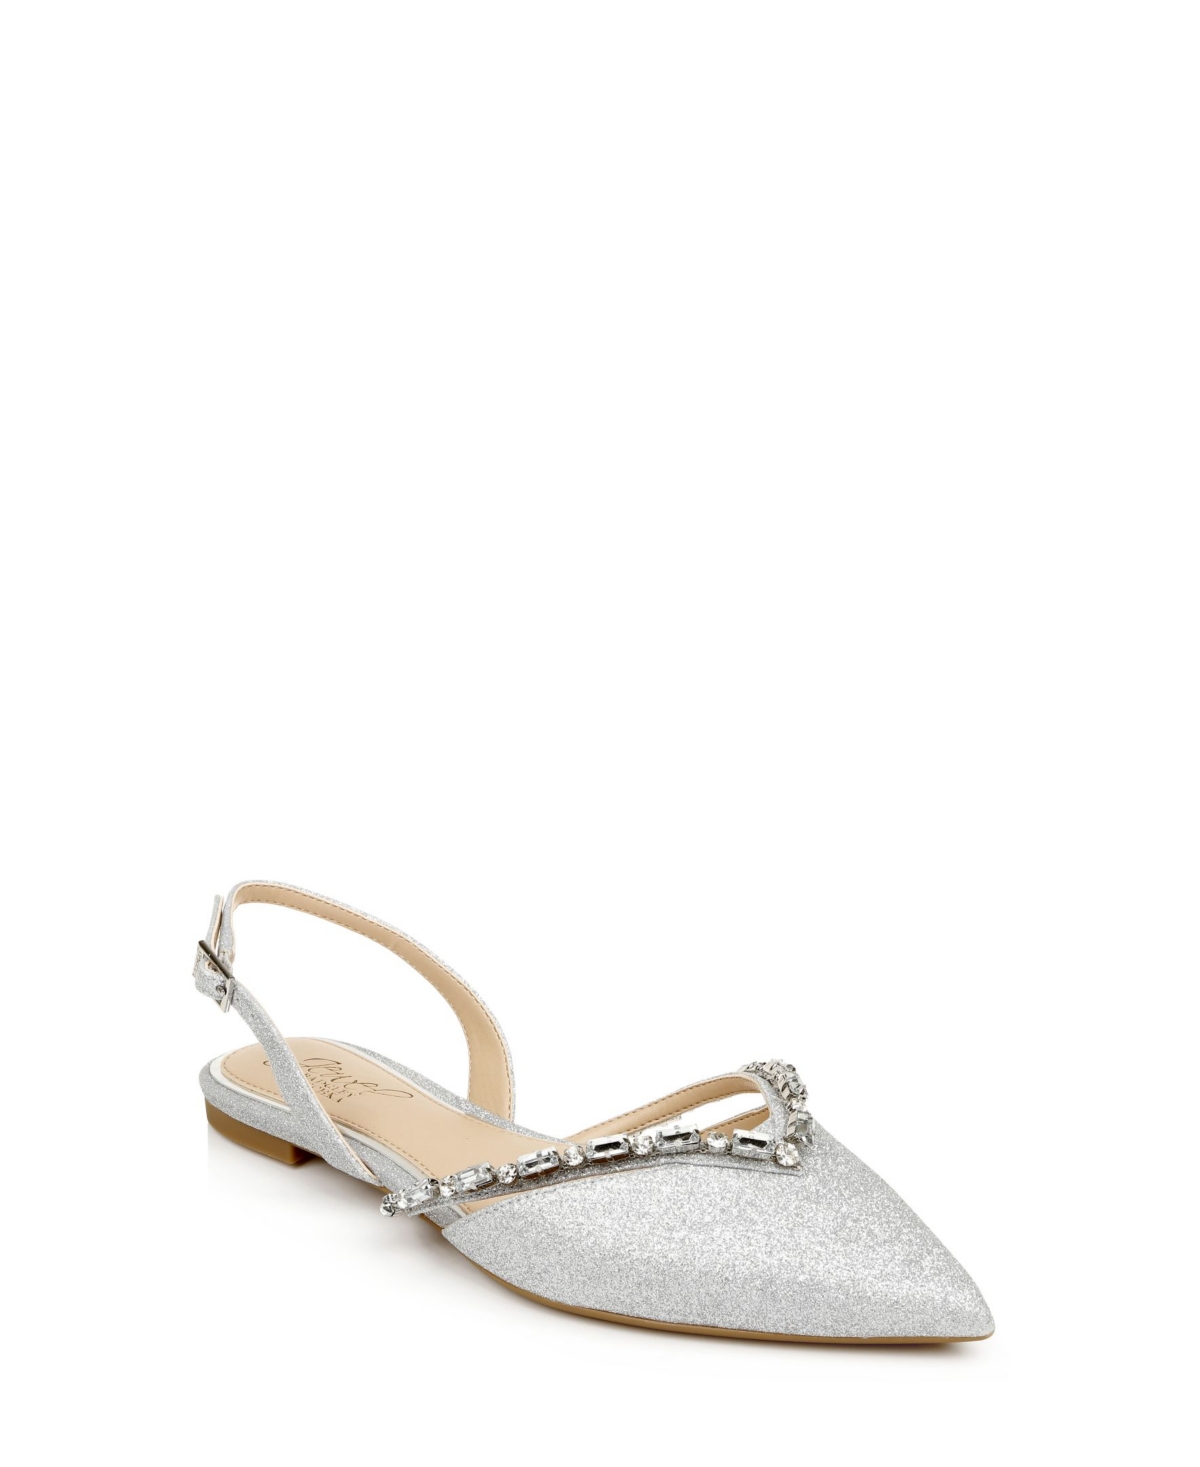 Women's Camden Slingback Pointed Toe Evening Flats - Silver Glitter